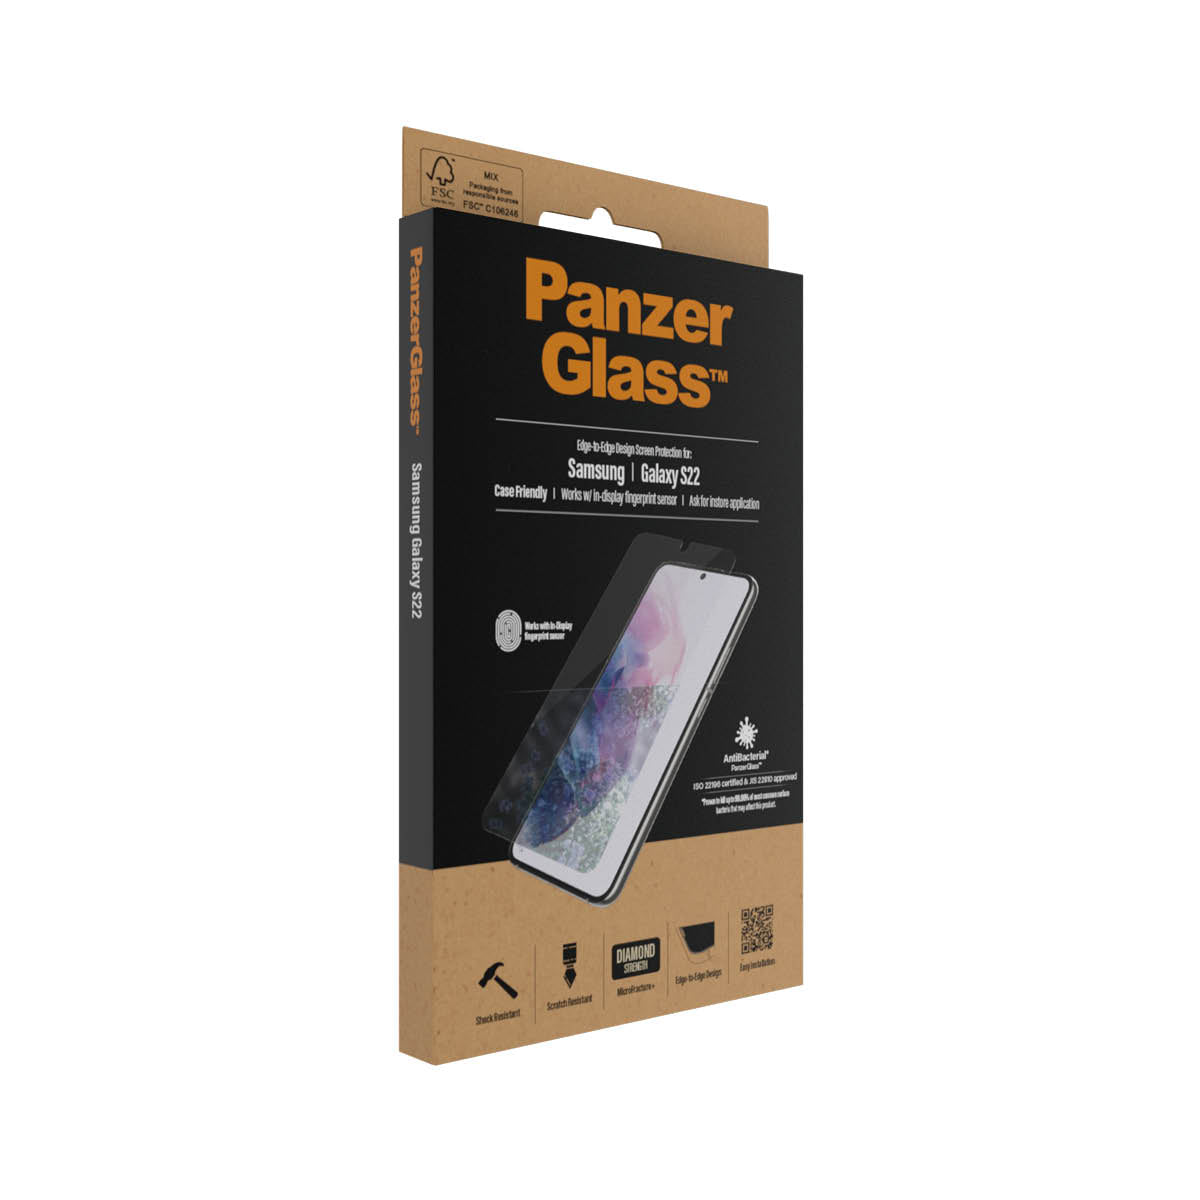 PANZERGLASS Samsung Galaxy S22 Screen Protector - Black Frame